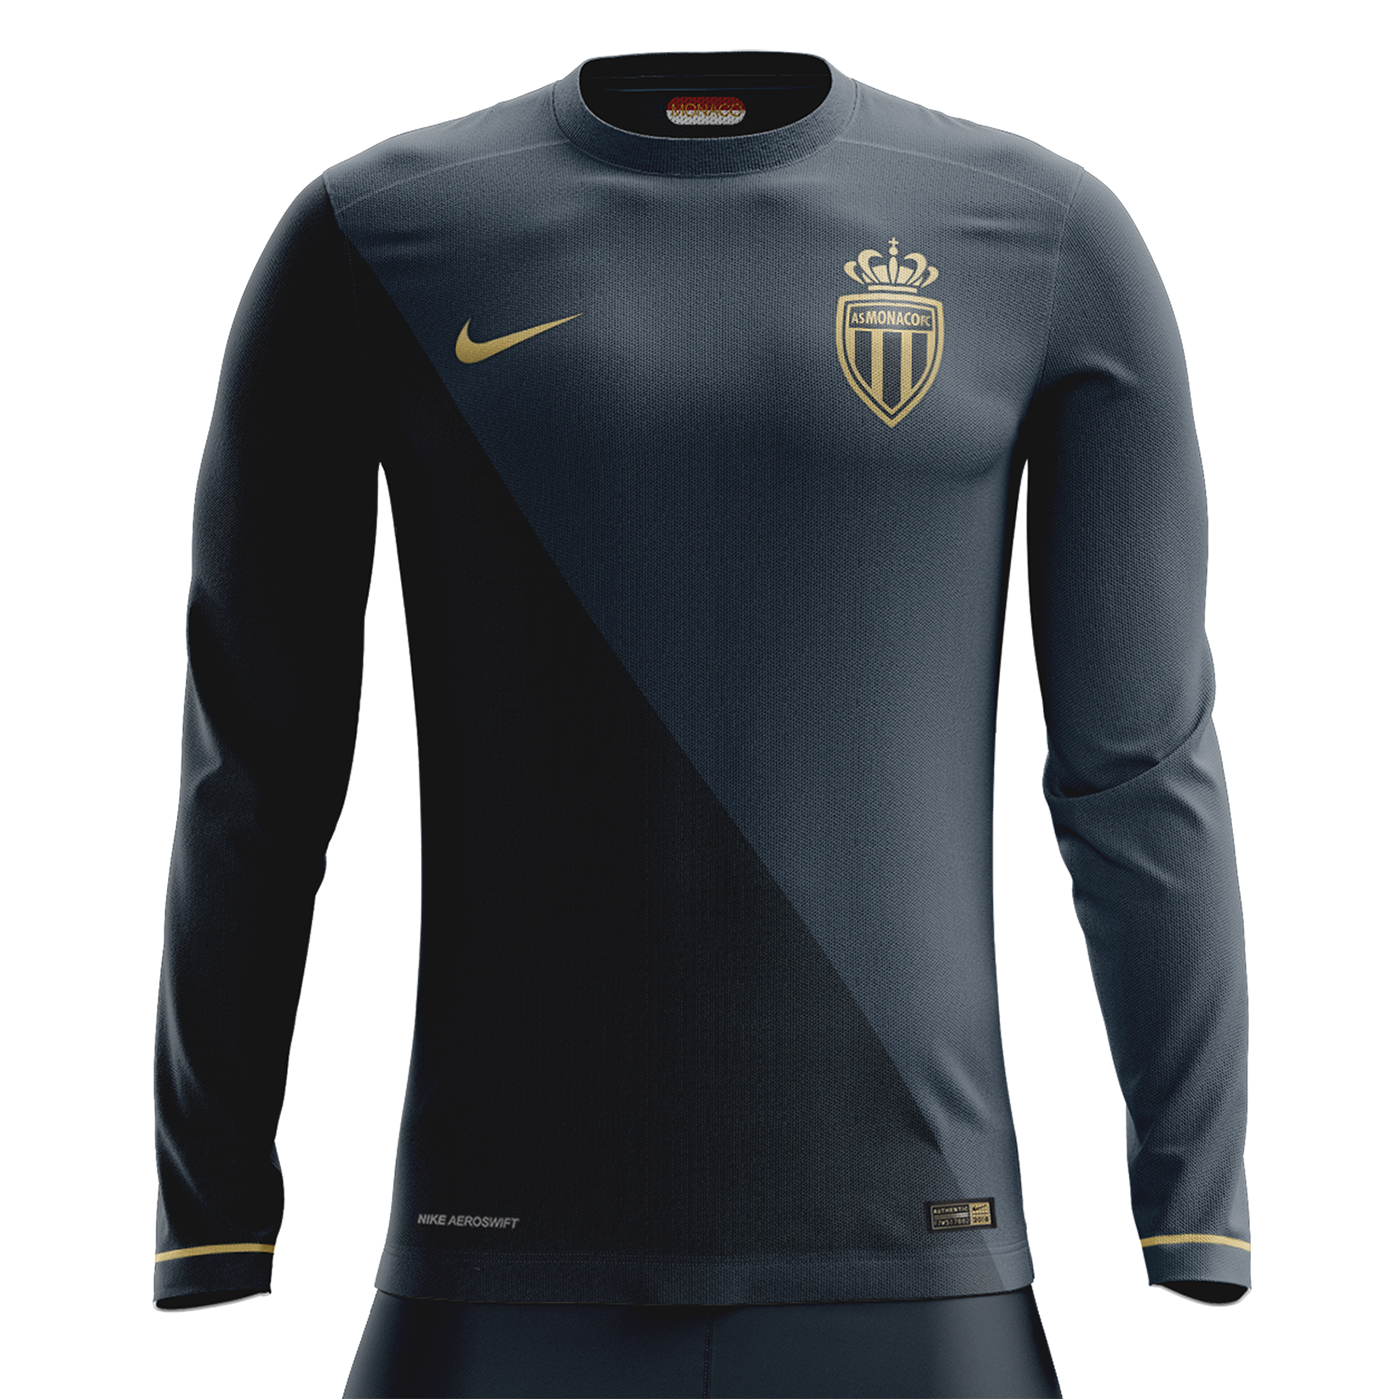 AS Monaco Monaco france maglia maillot jersey Nike kit design